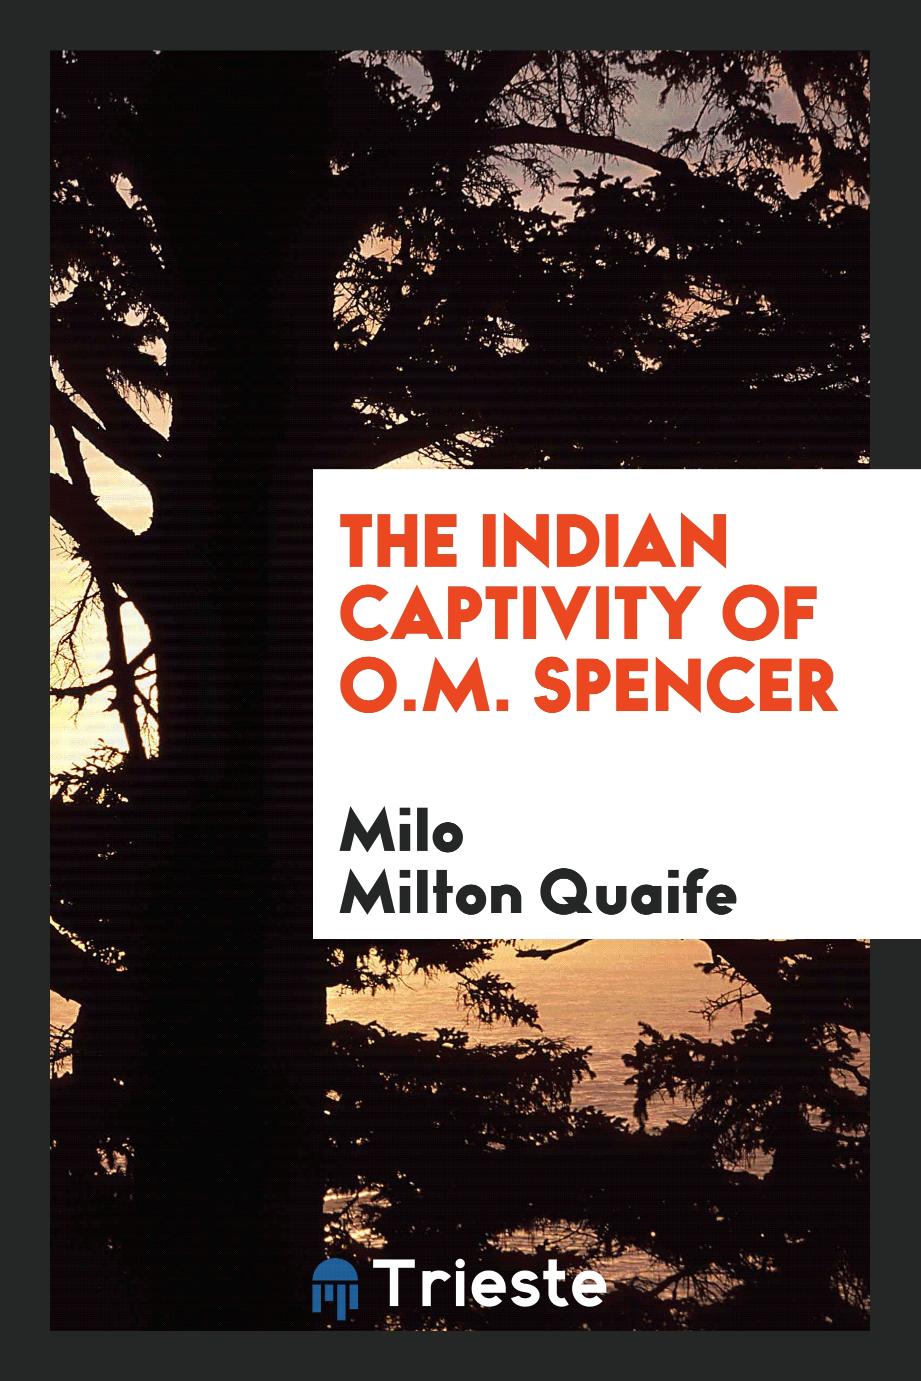 The Indian captivity of O.M. Spencer